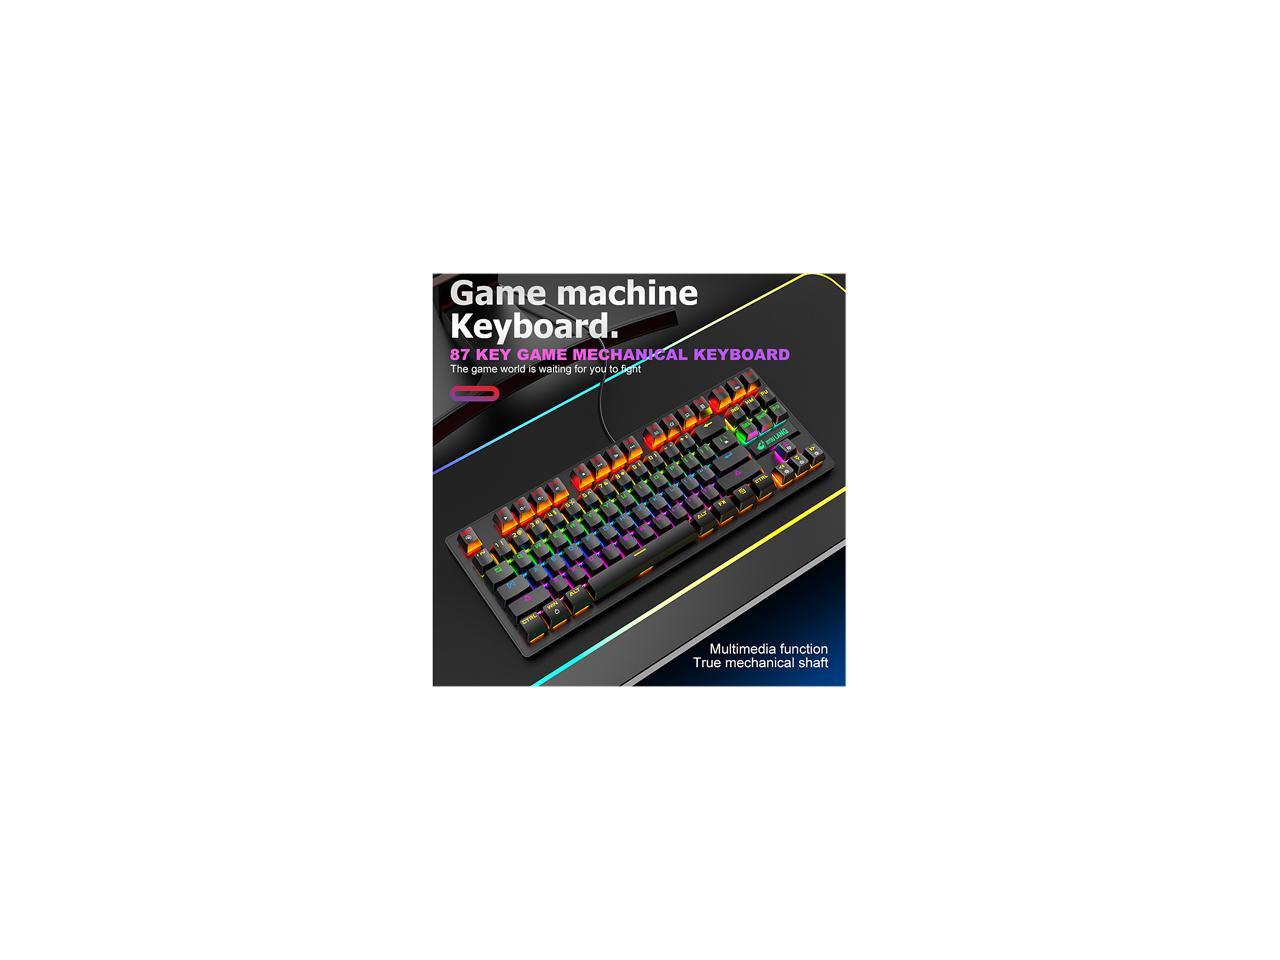 K2 Mechanical Keyboard - Black